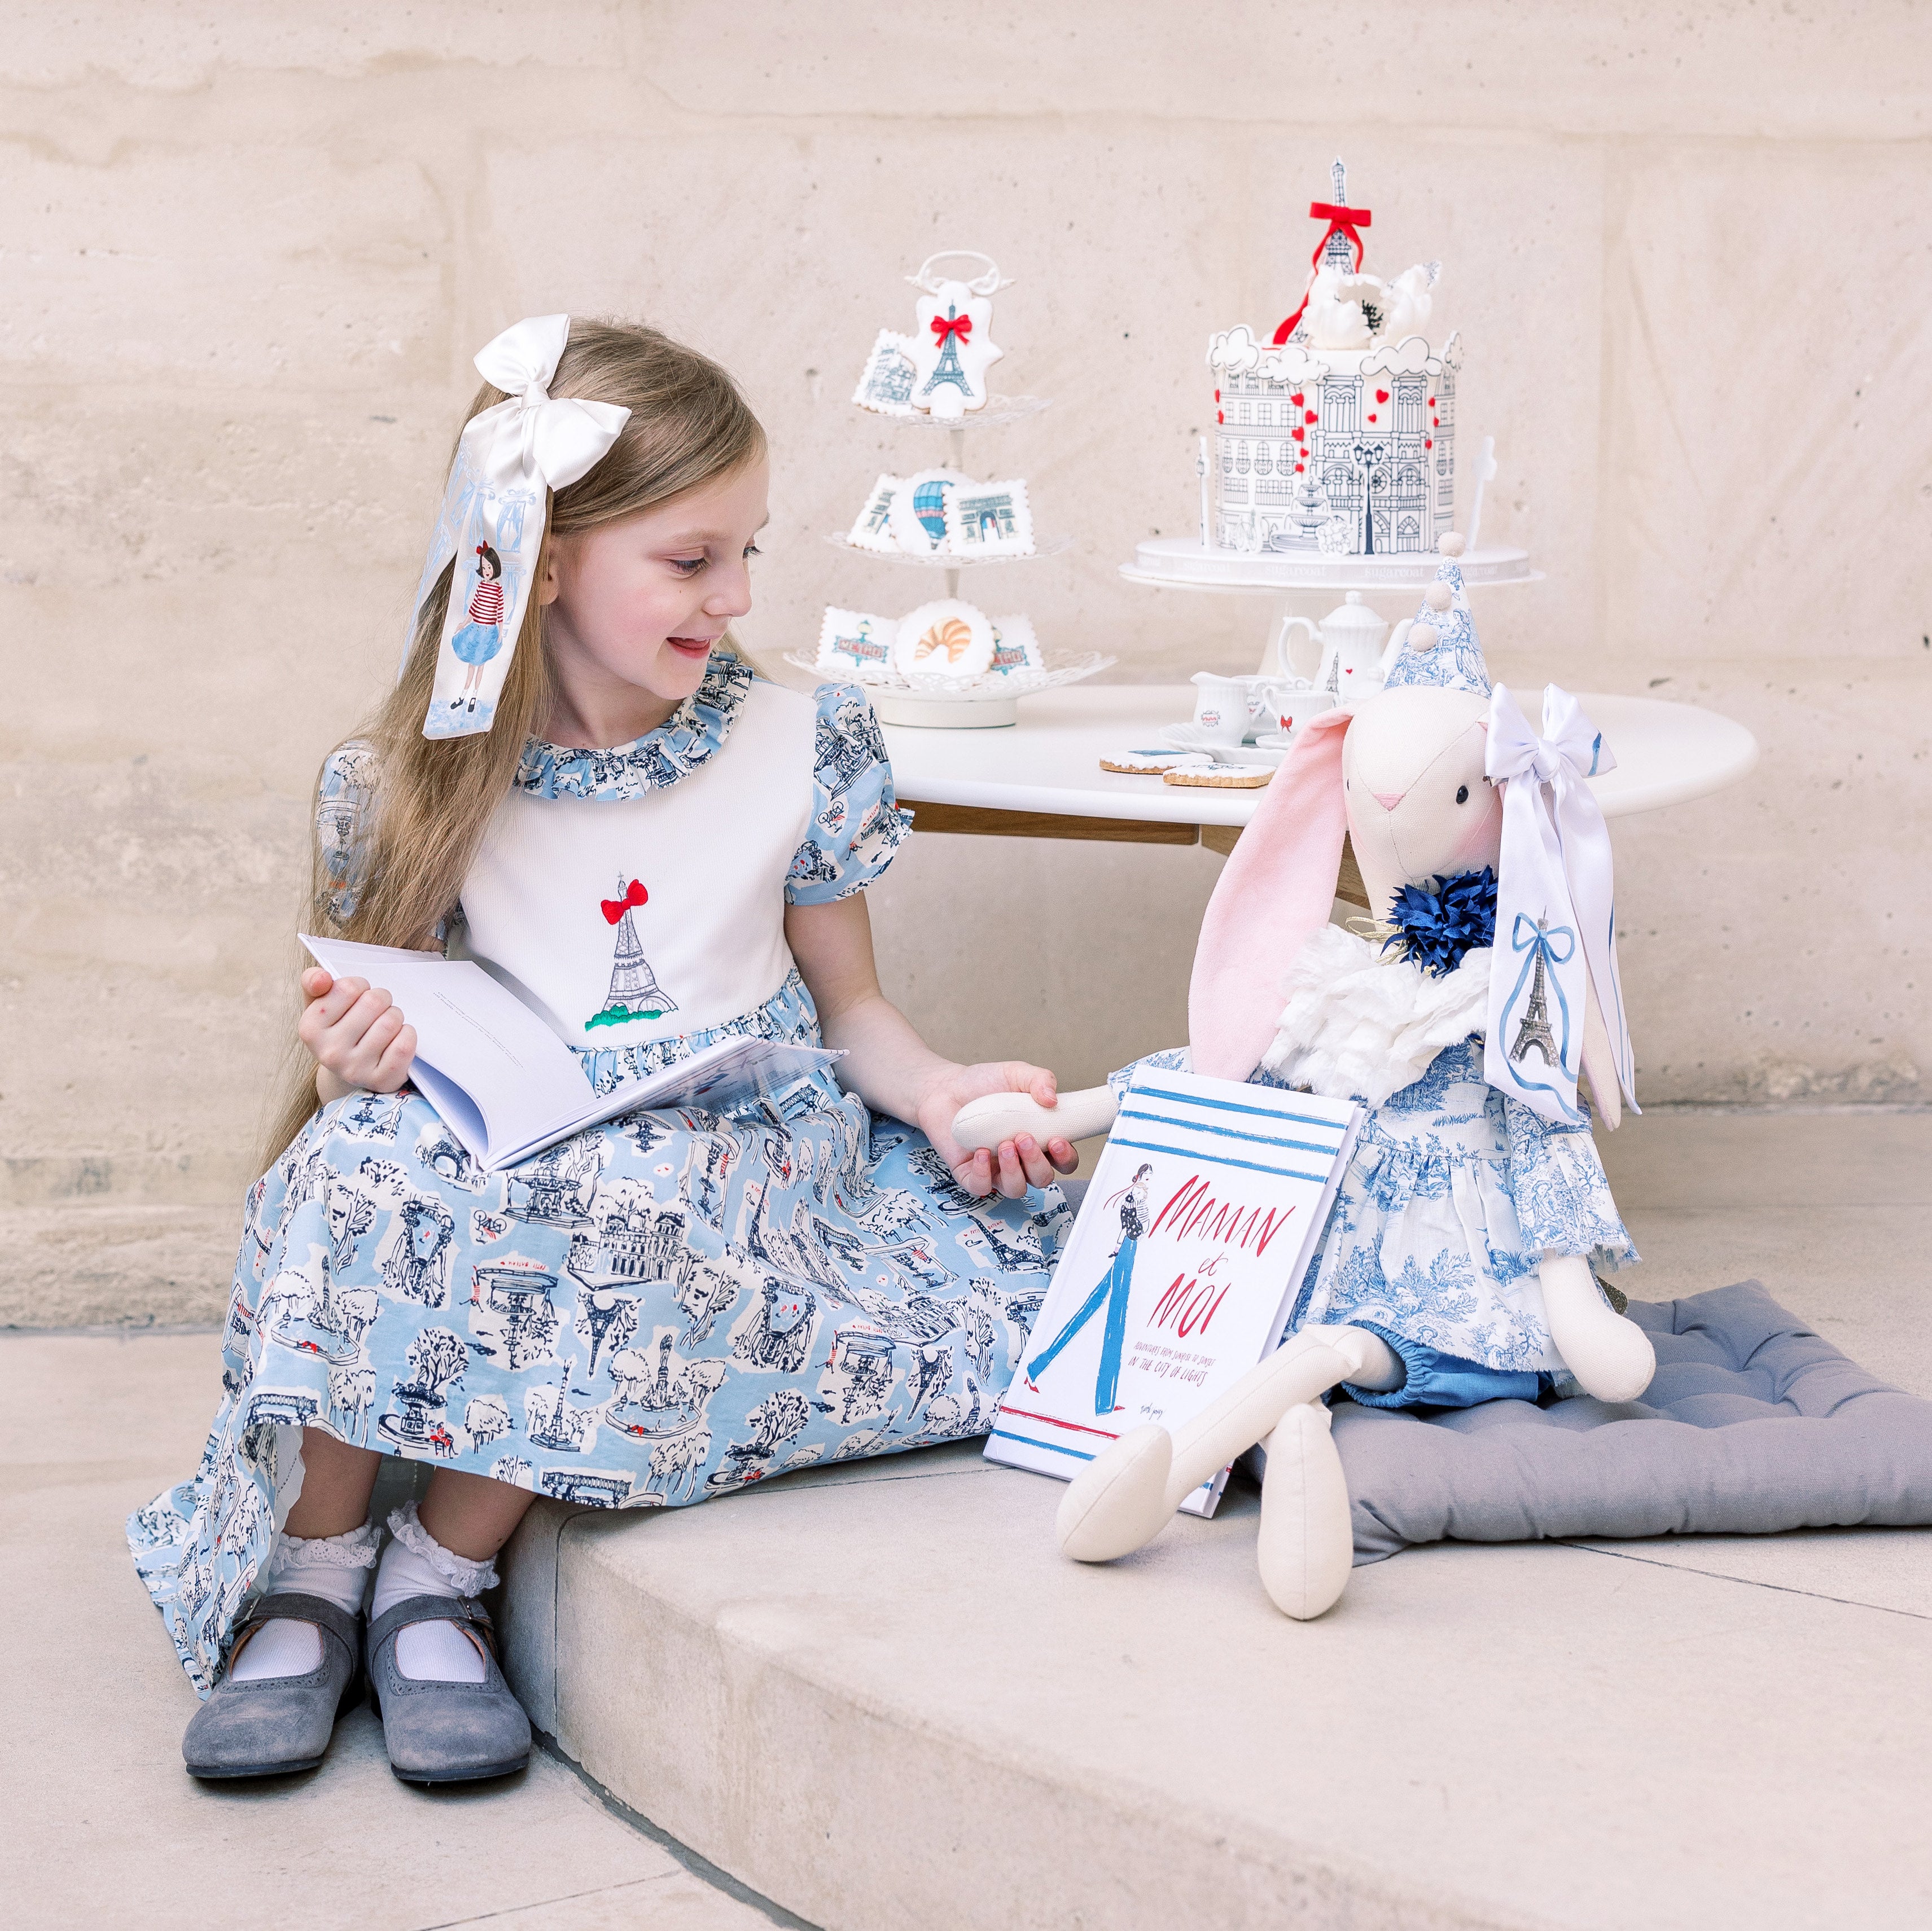 Paris French style parisian tea party celebration inspiration for little girls children dress, cakes, book ideas